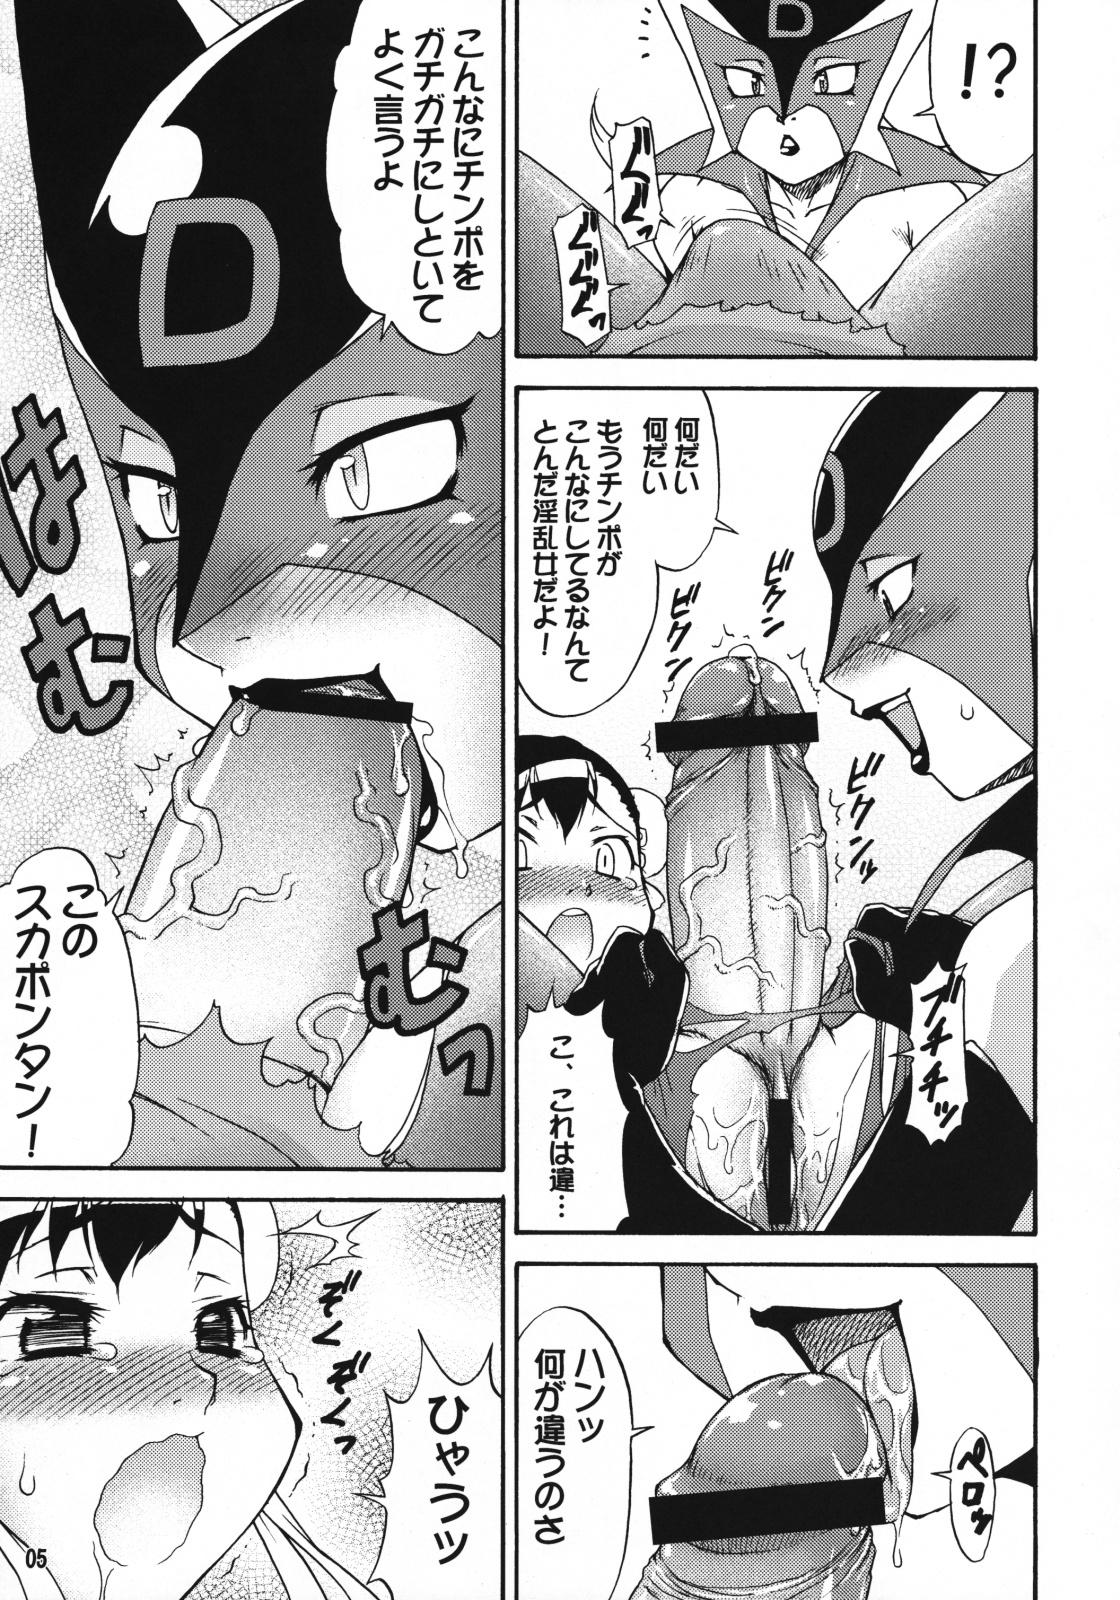 Petite Mikawa Ondo 6 - Street fighter Darkstalkers Princess crown Cyberbots Yatterman Masturbate - Page 4